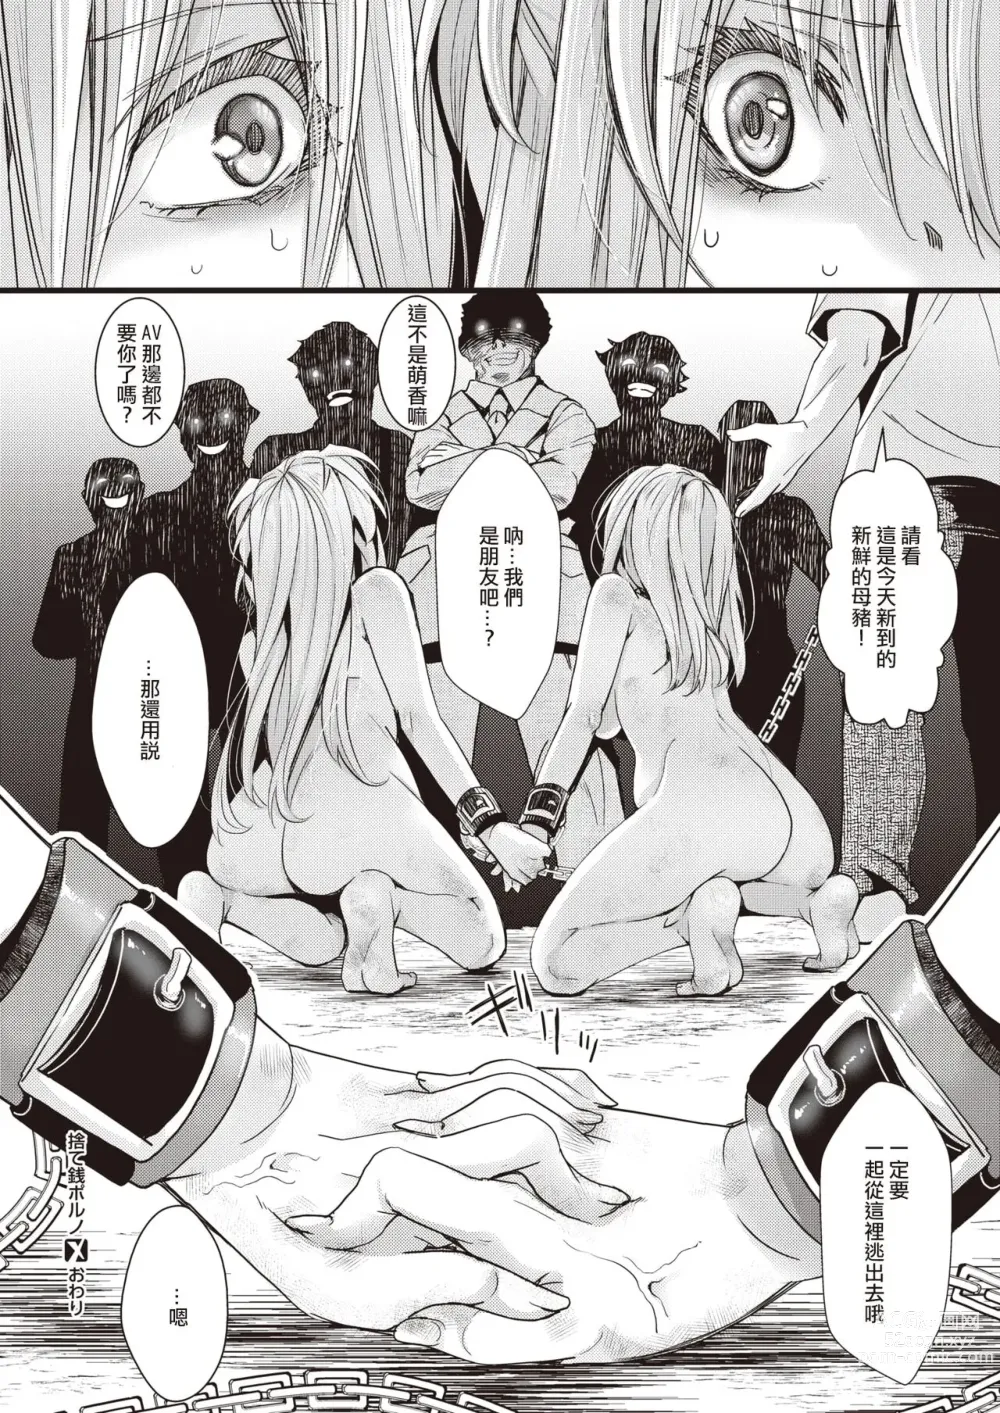 Page 17 of manga Sutesen Porno - wasting porno